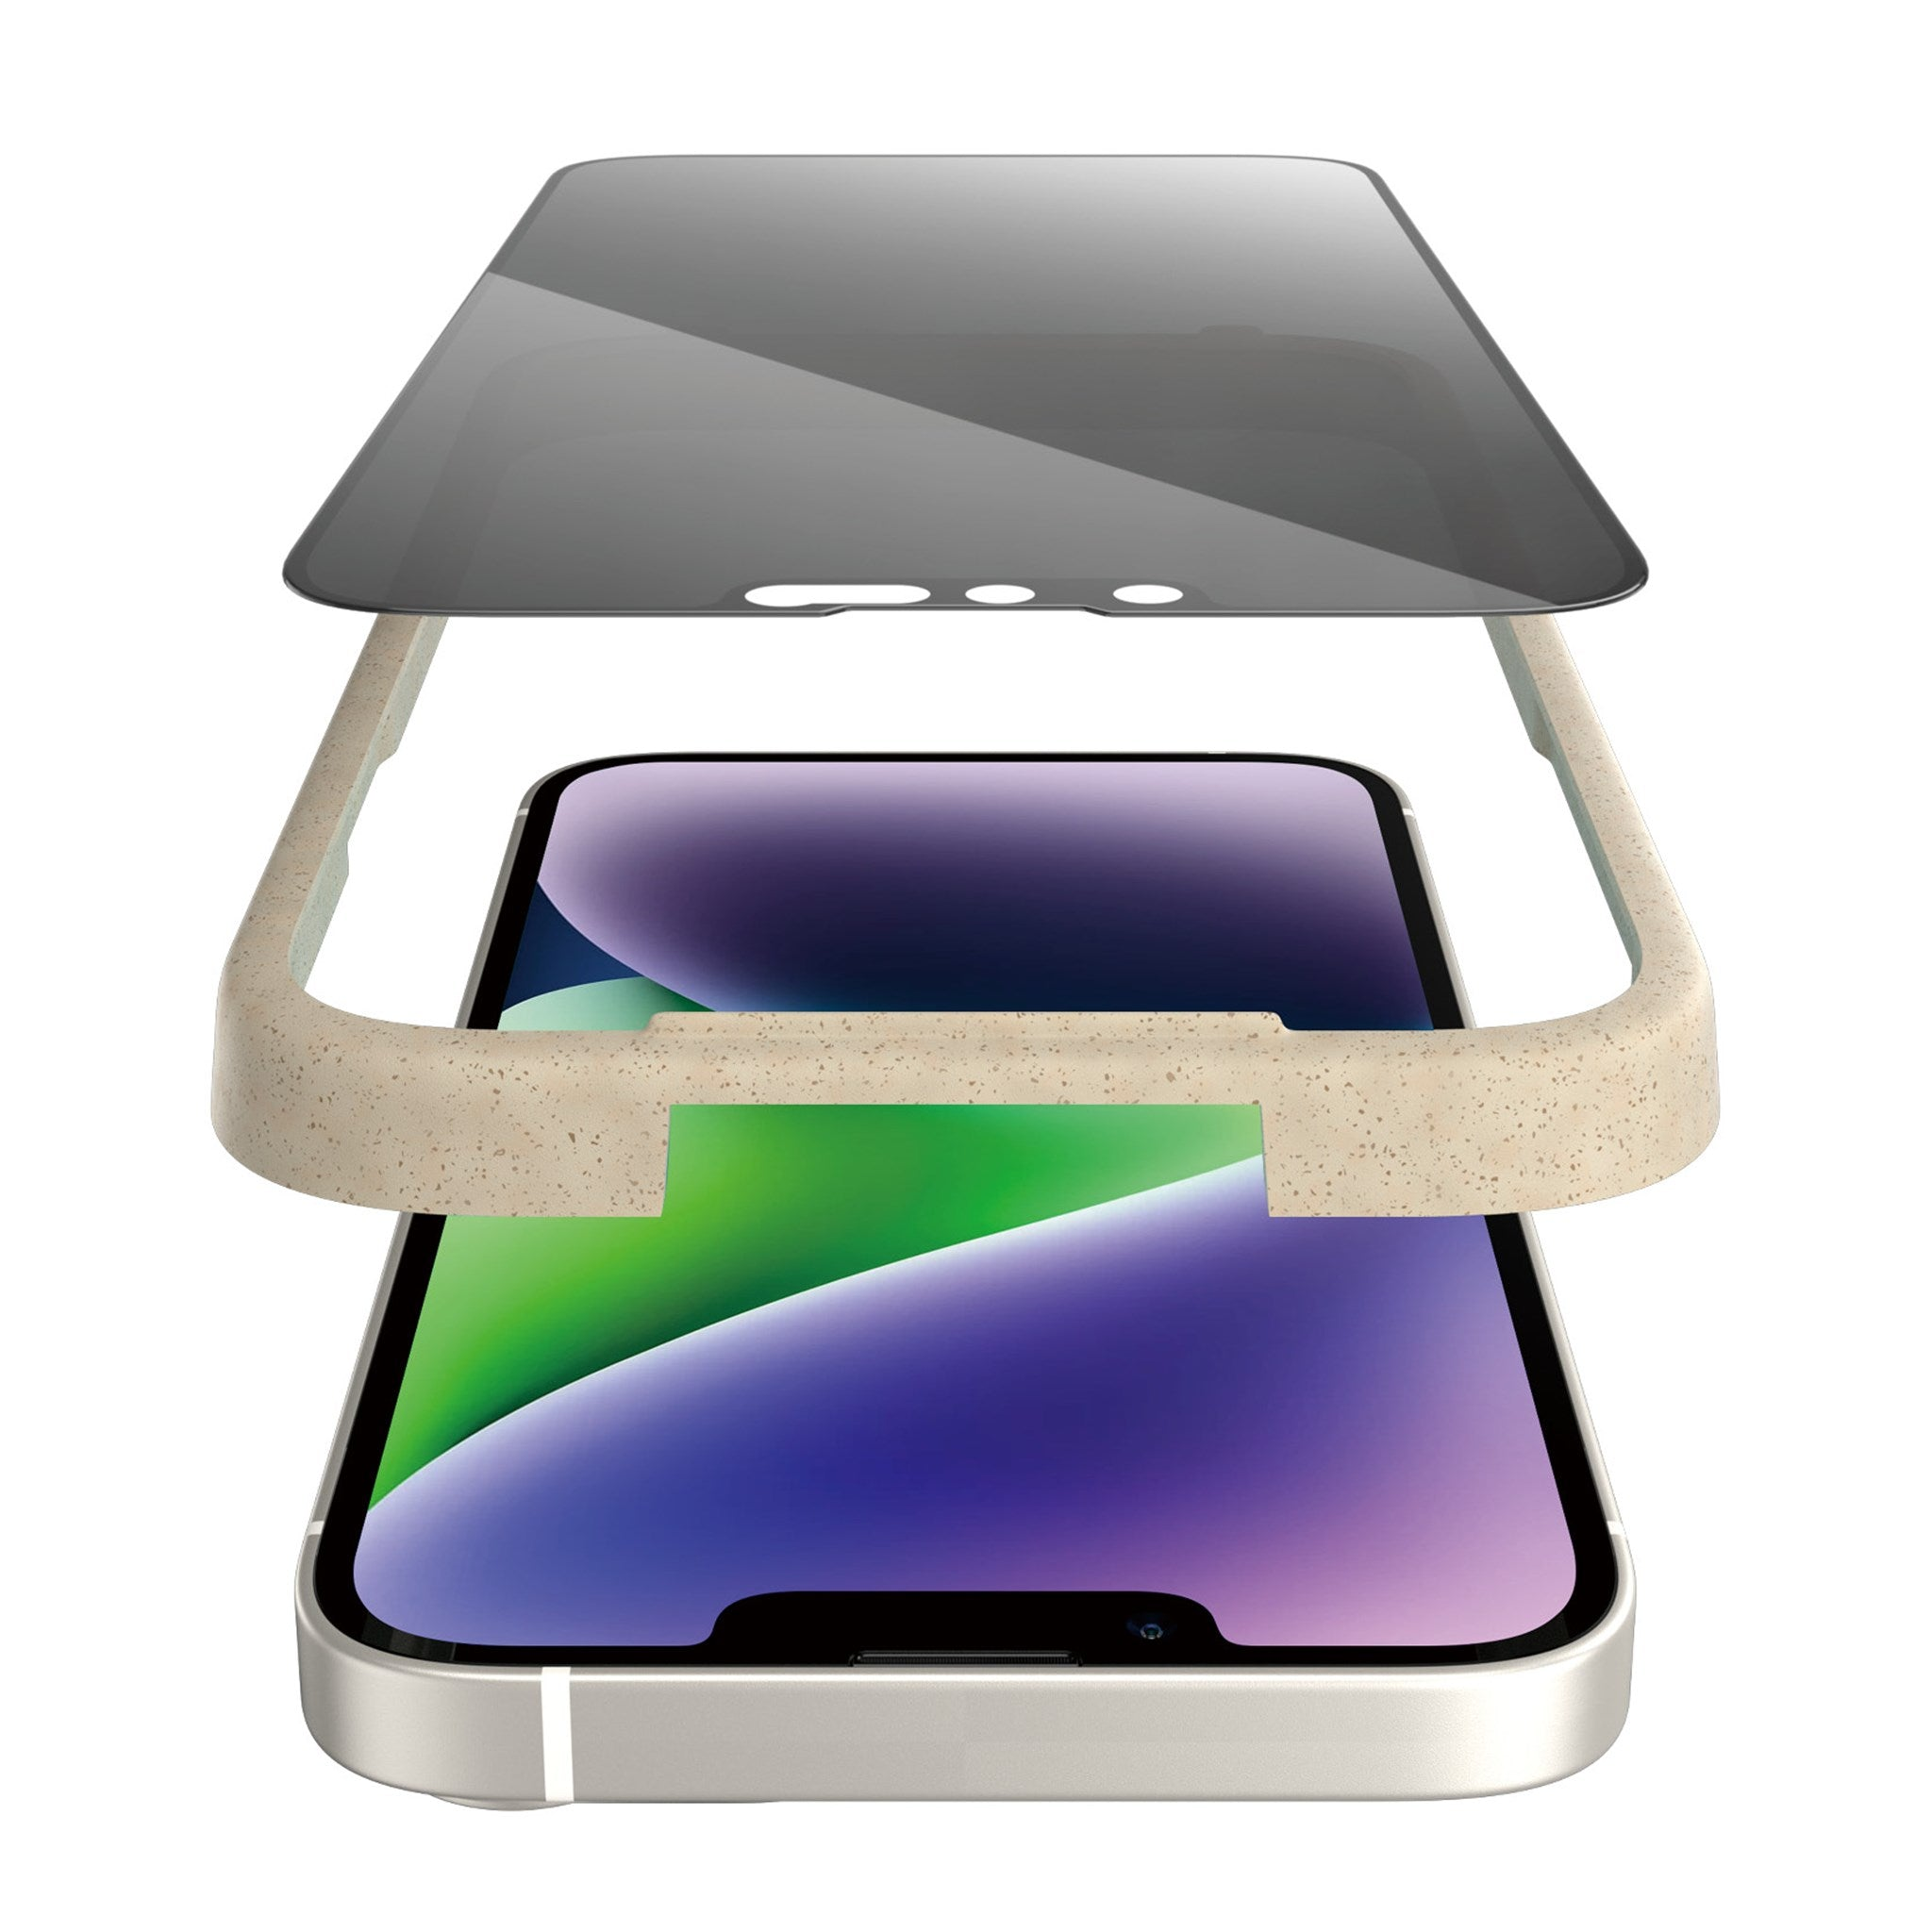 PANZERGLASS Apple iPhone 14 Plus Fit | | 13 Apple Max) Pro Ultra-Wide iPhone Plus 14 Displayschutz(für m. iPhone 13 Max | EasyAligner Pro